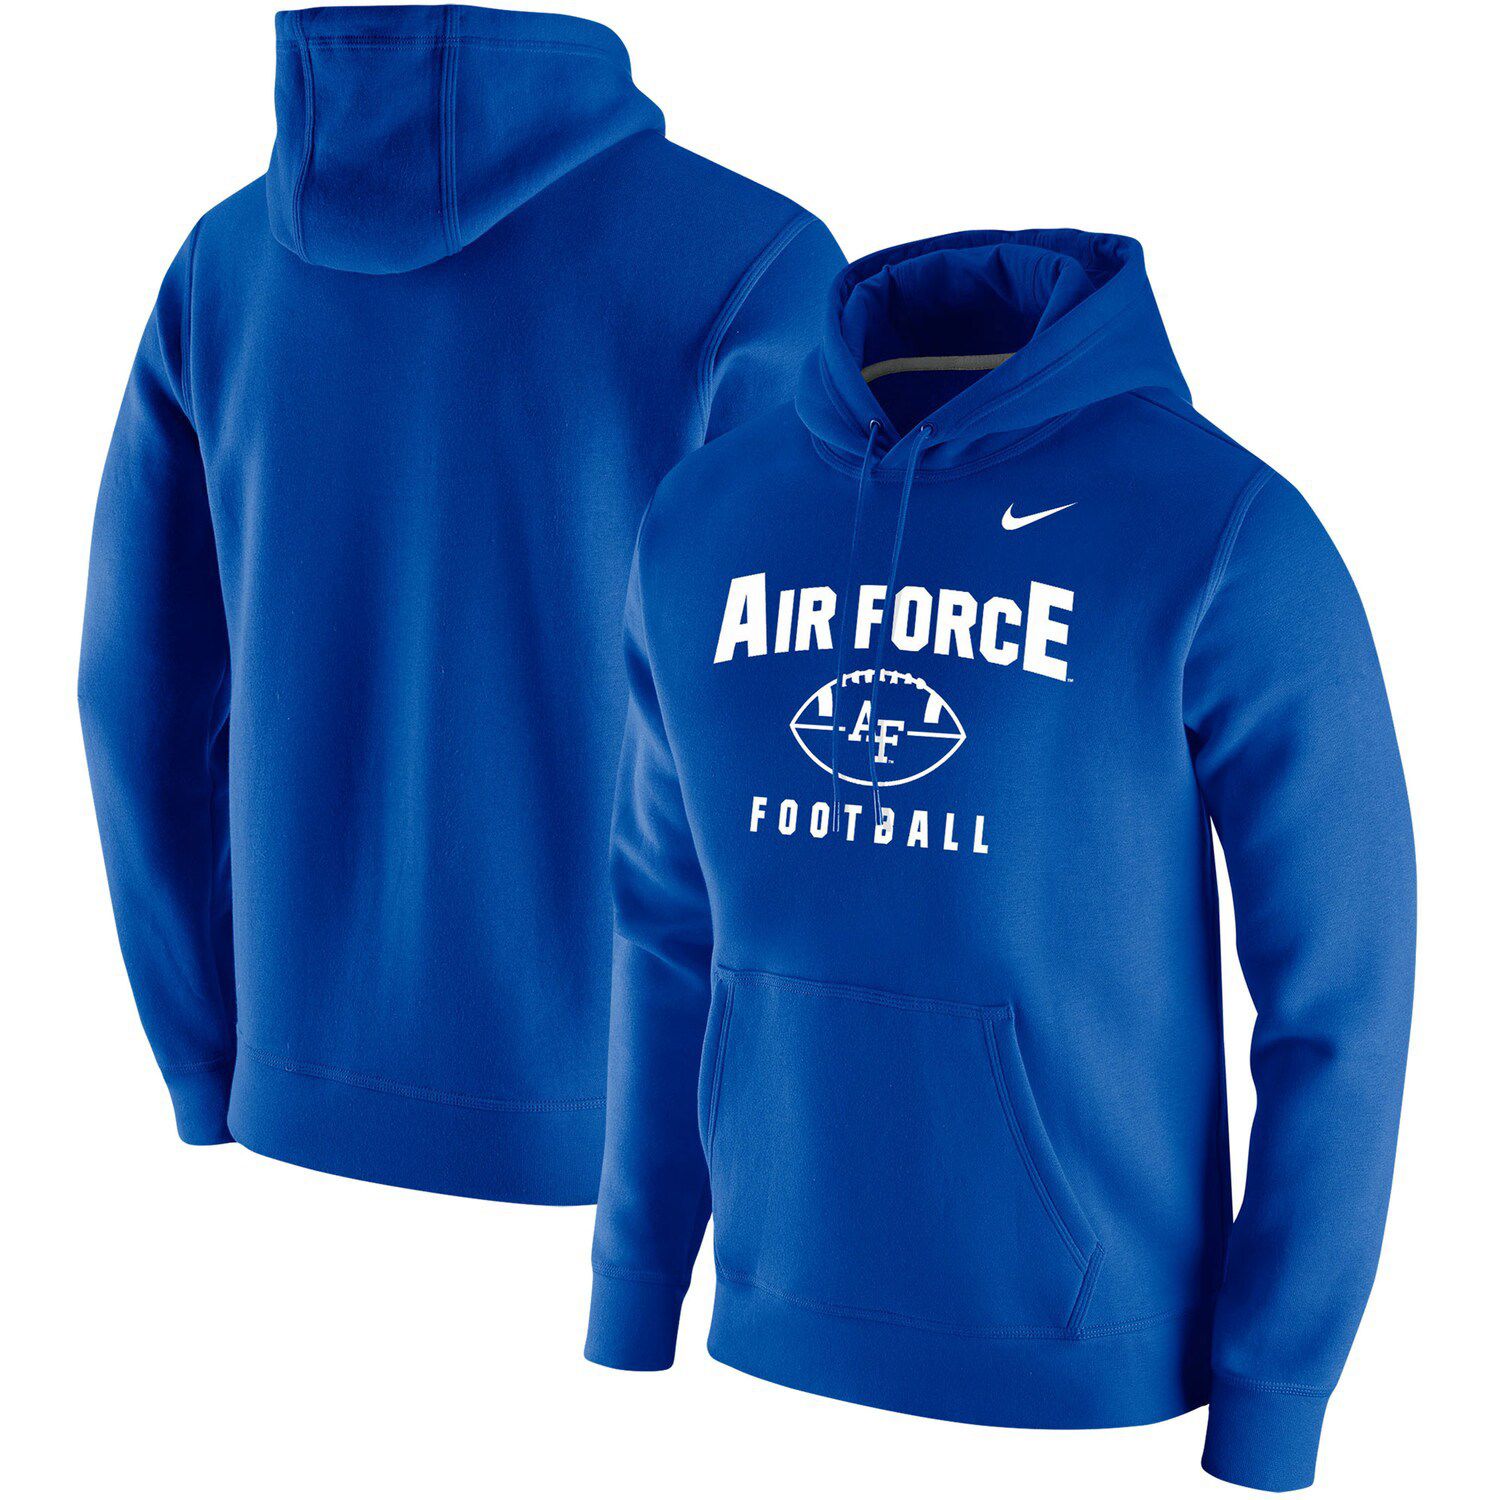 kohls air force 1s